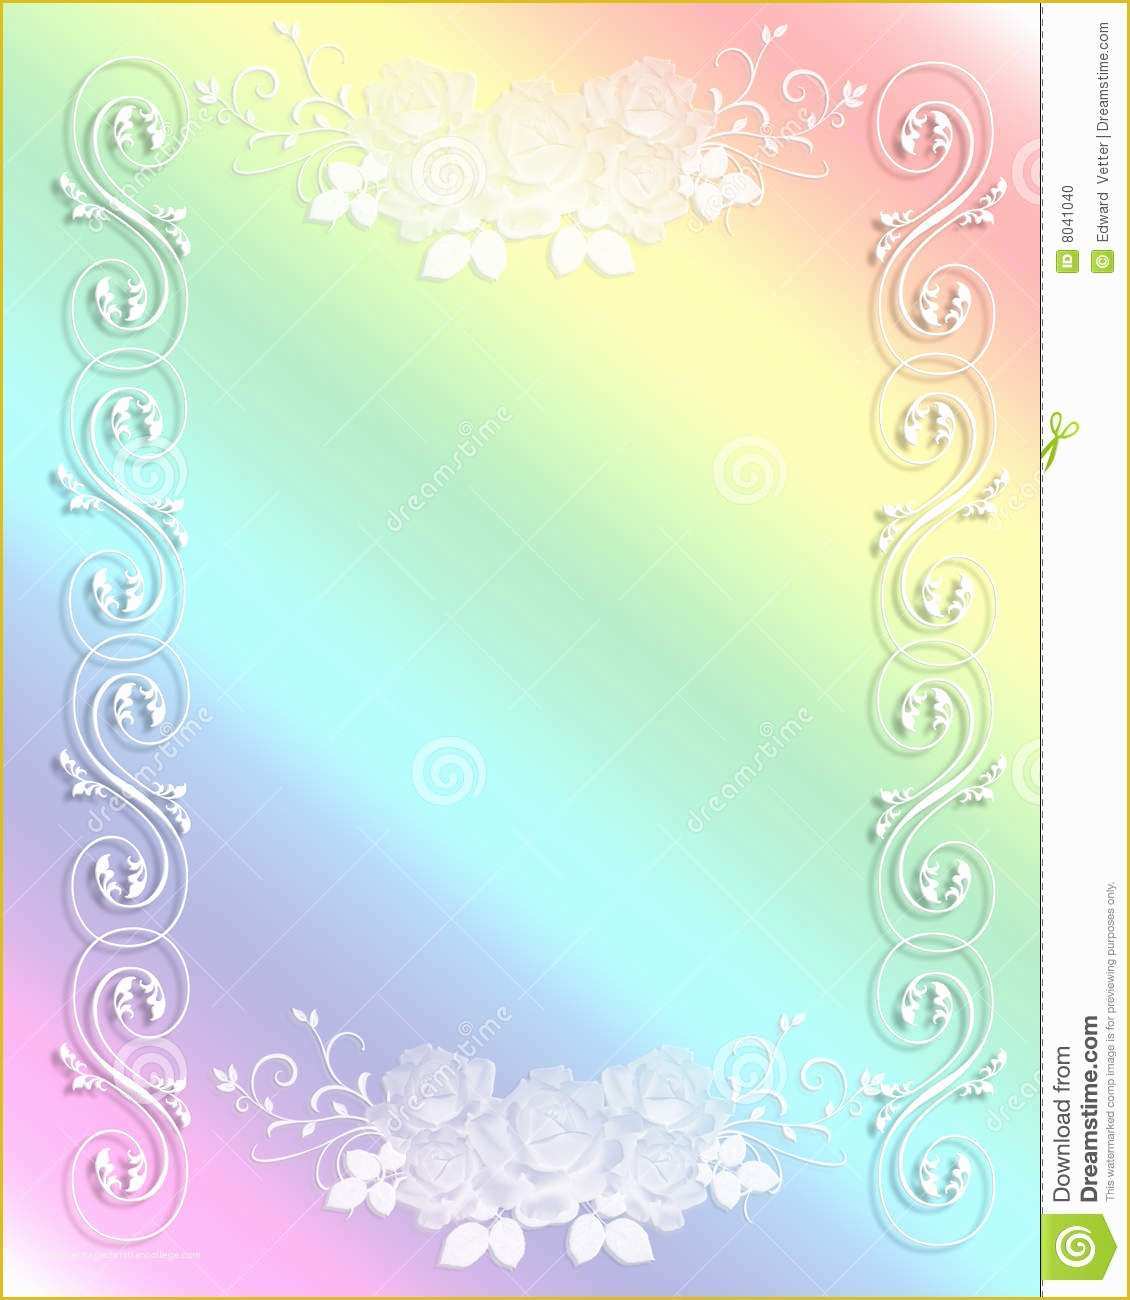 Rainbow Wedding Invitation Templates Free Of Wedding Invitation Border Rainbow Lace Stock Image